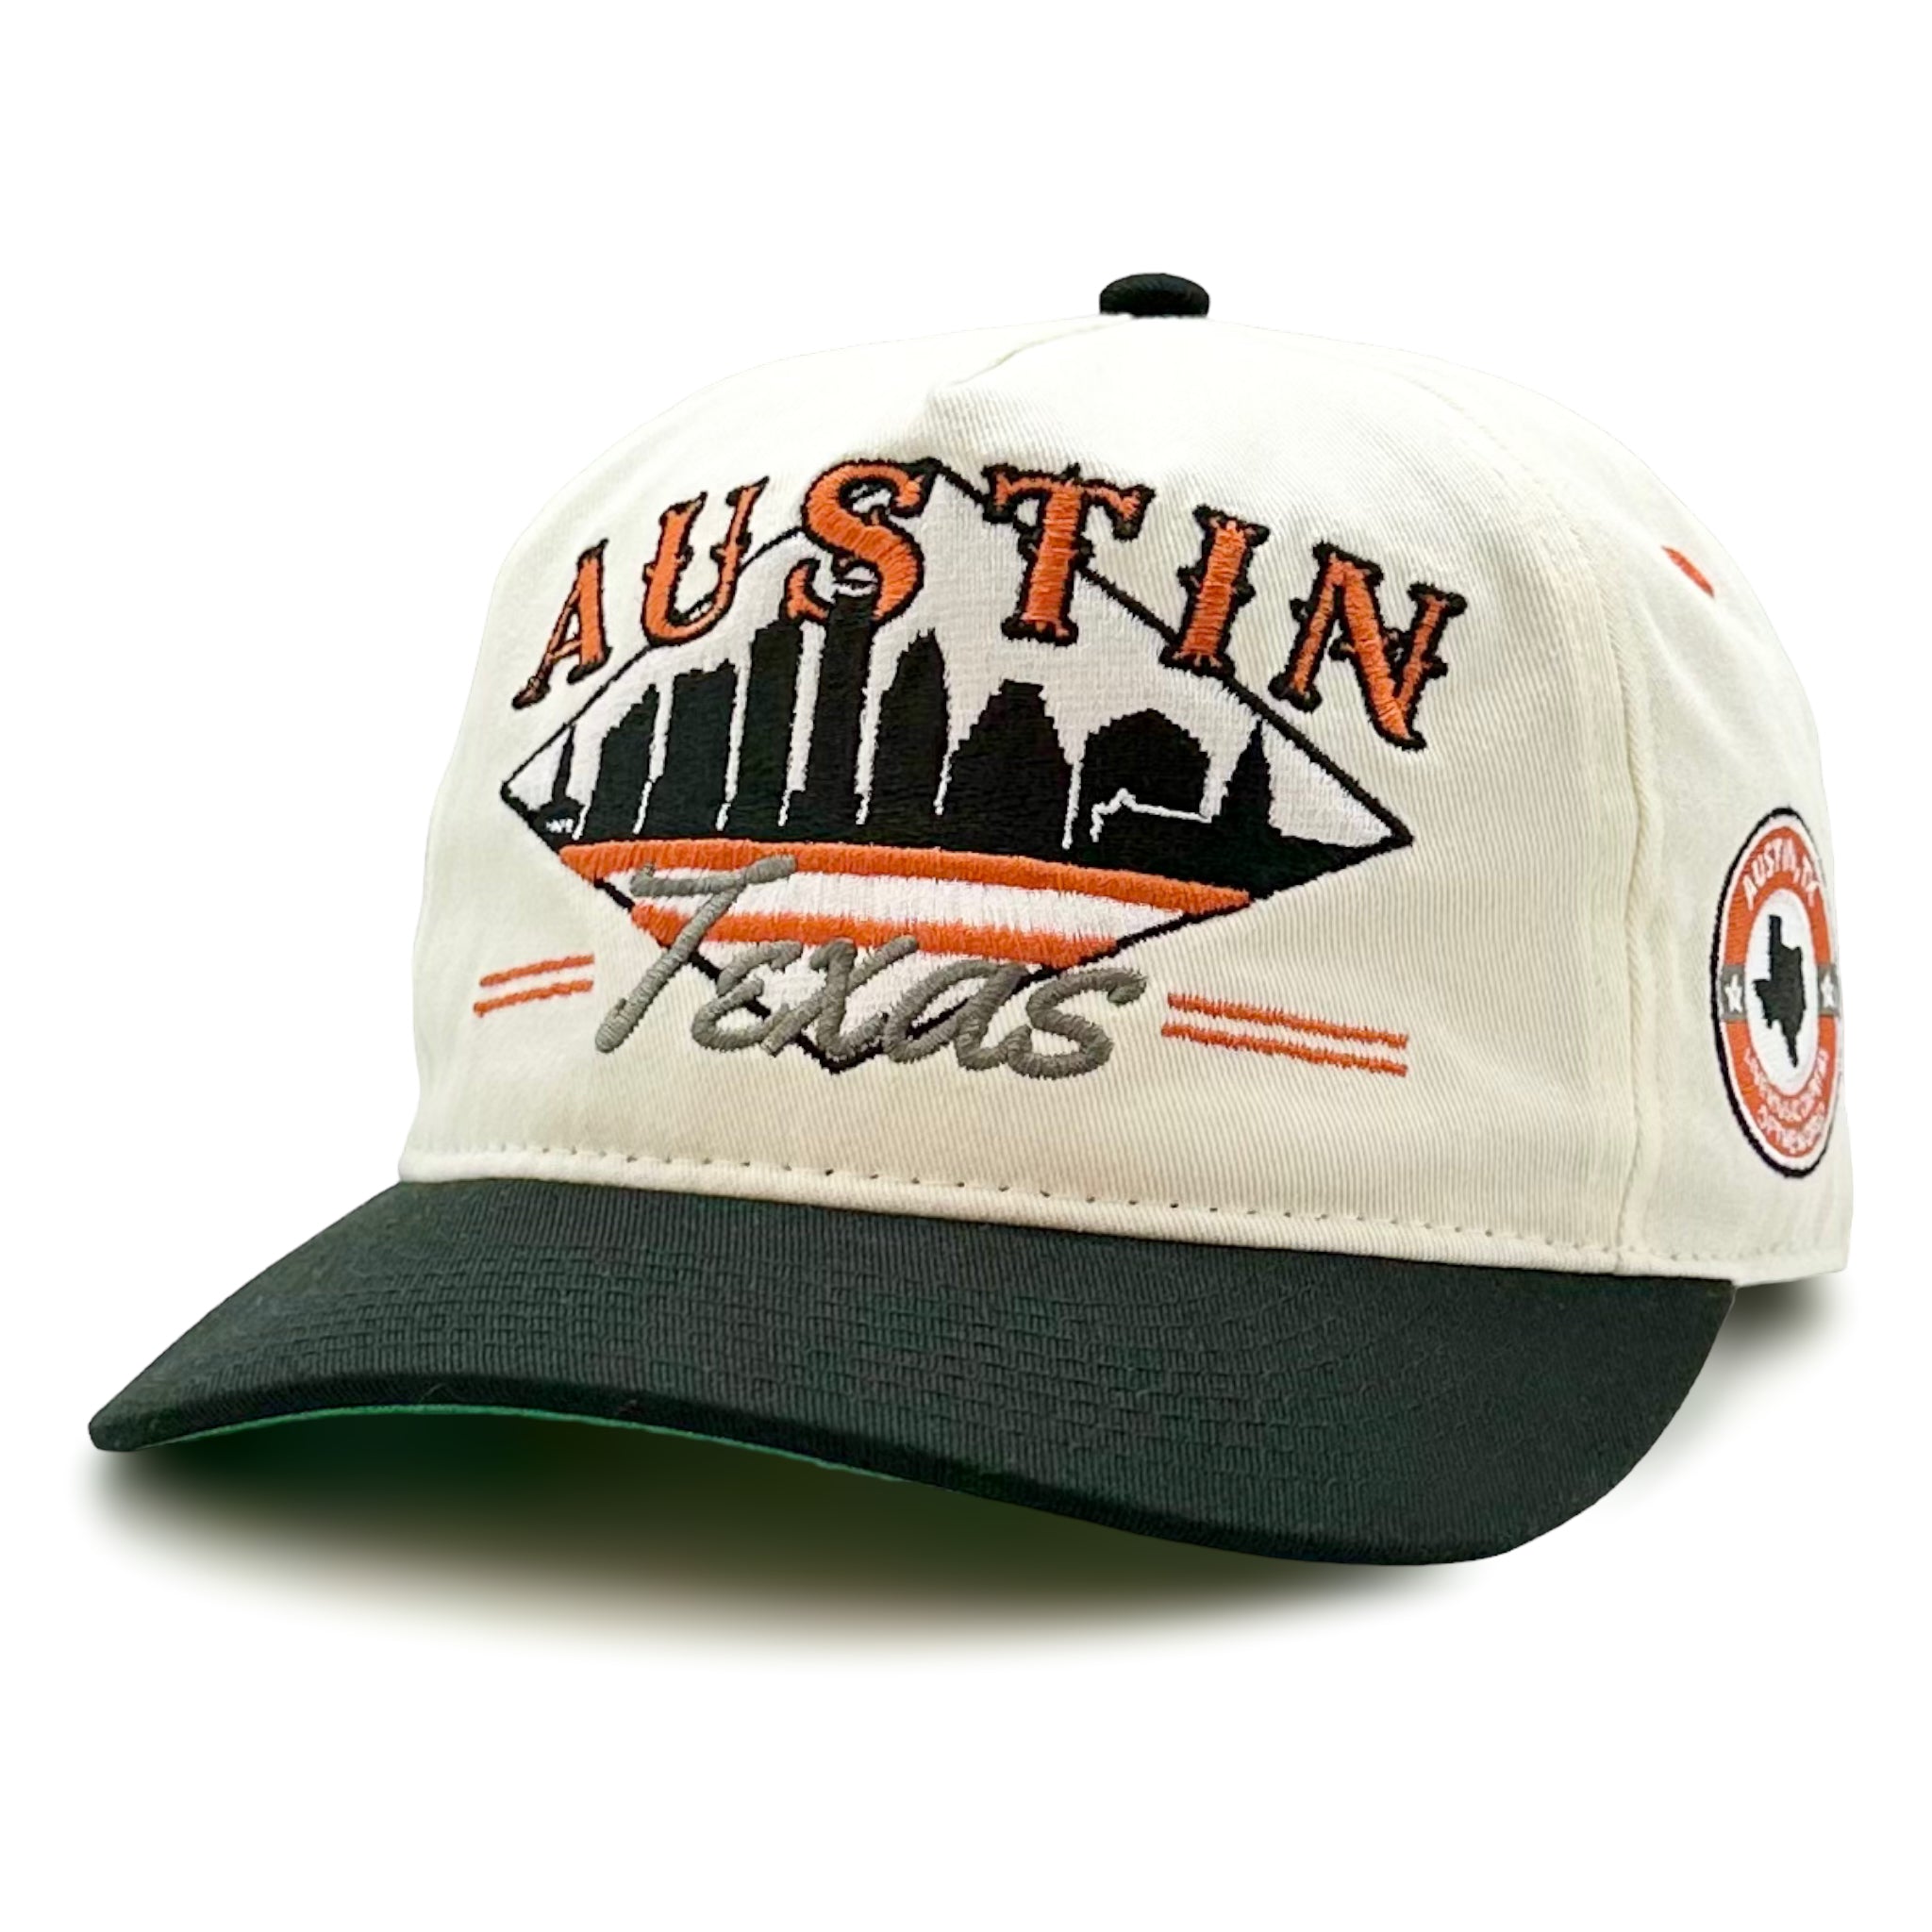 ATX Vintage Snapback Hats | Austin Texas Souvenirs | Rope & Cord Hats